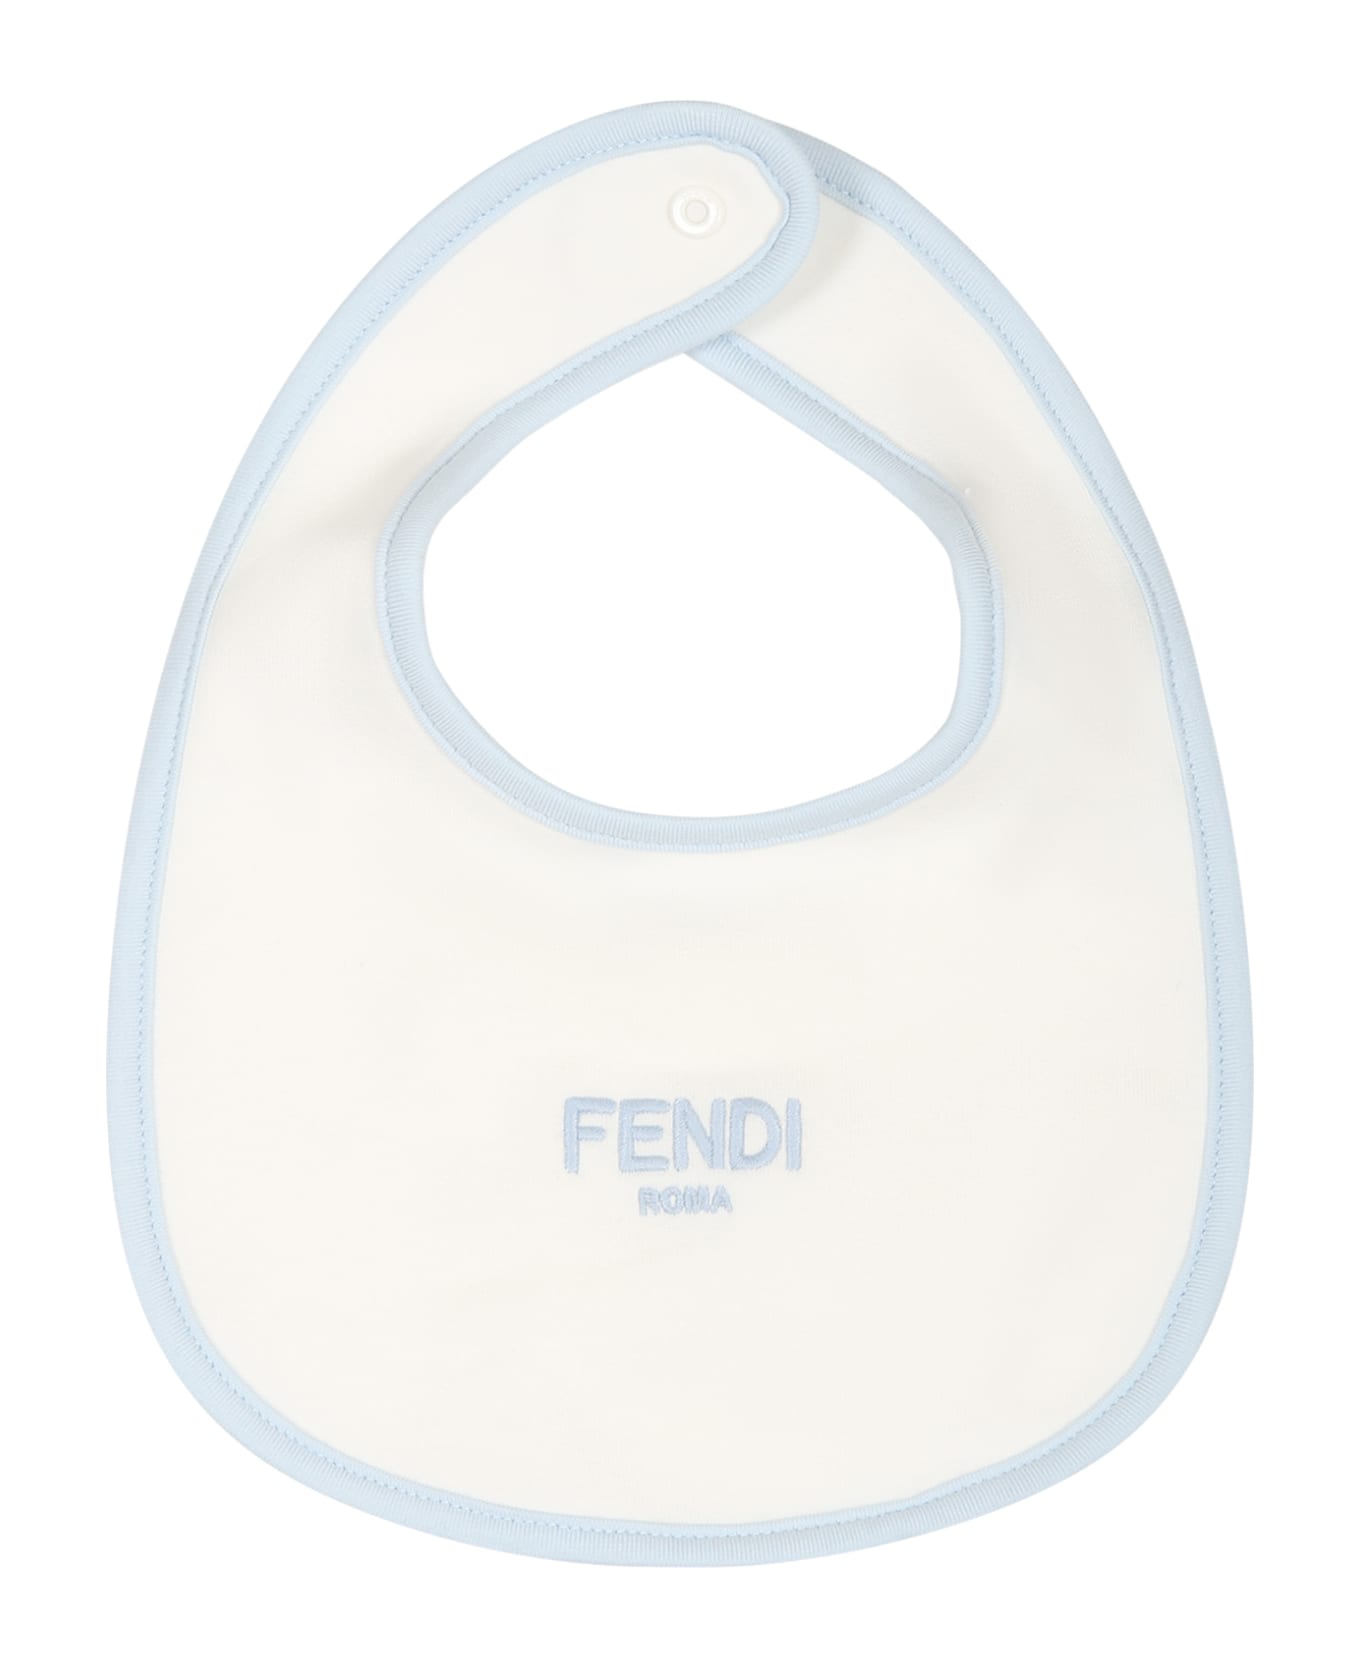 Fendi Light Blue Set For Baby Girl With Logo - Light Blue ボディスーツ＆セットアップ